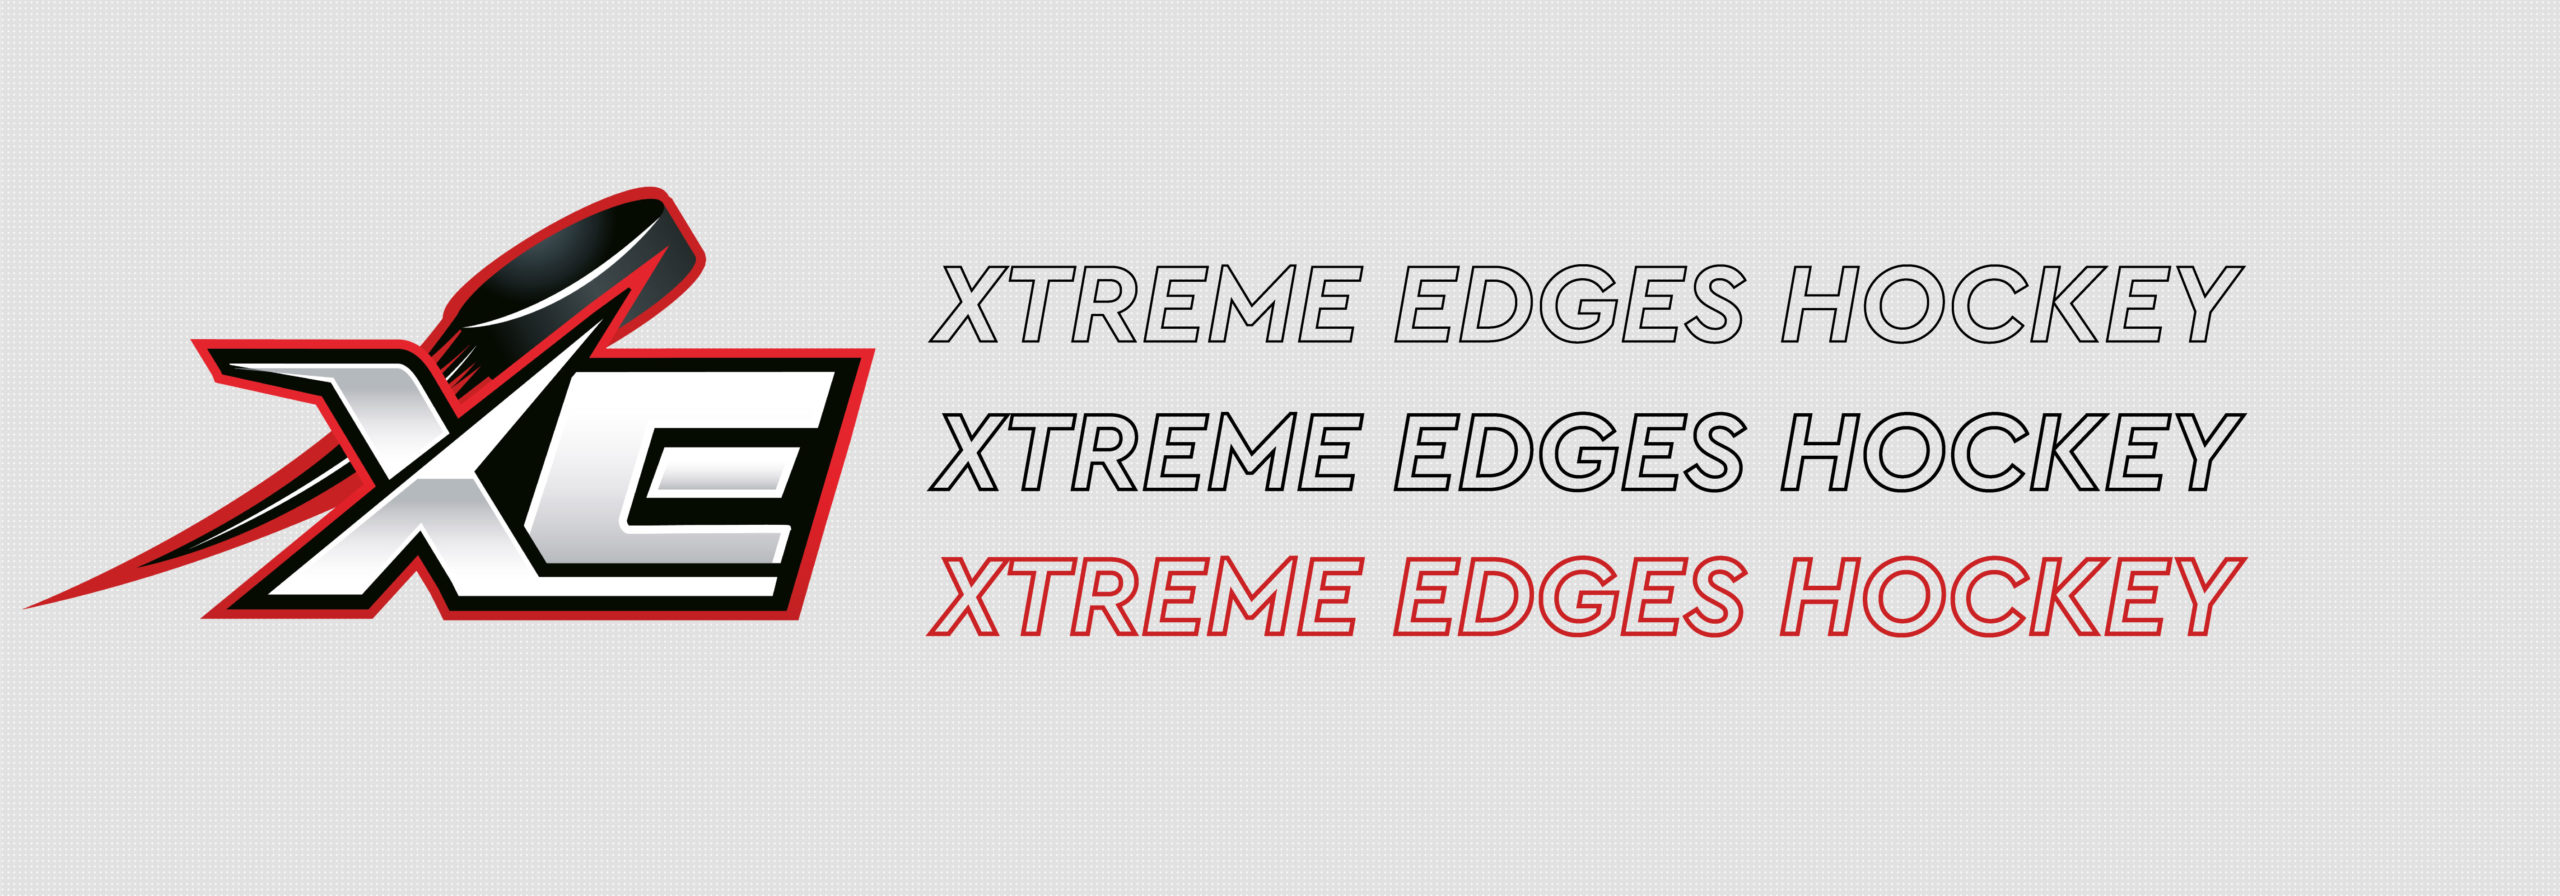 Xtreme Edges Ice Hockey Equipment Bag